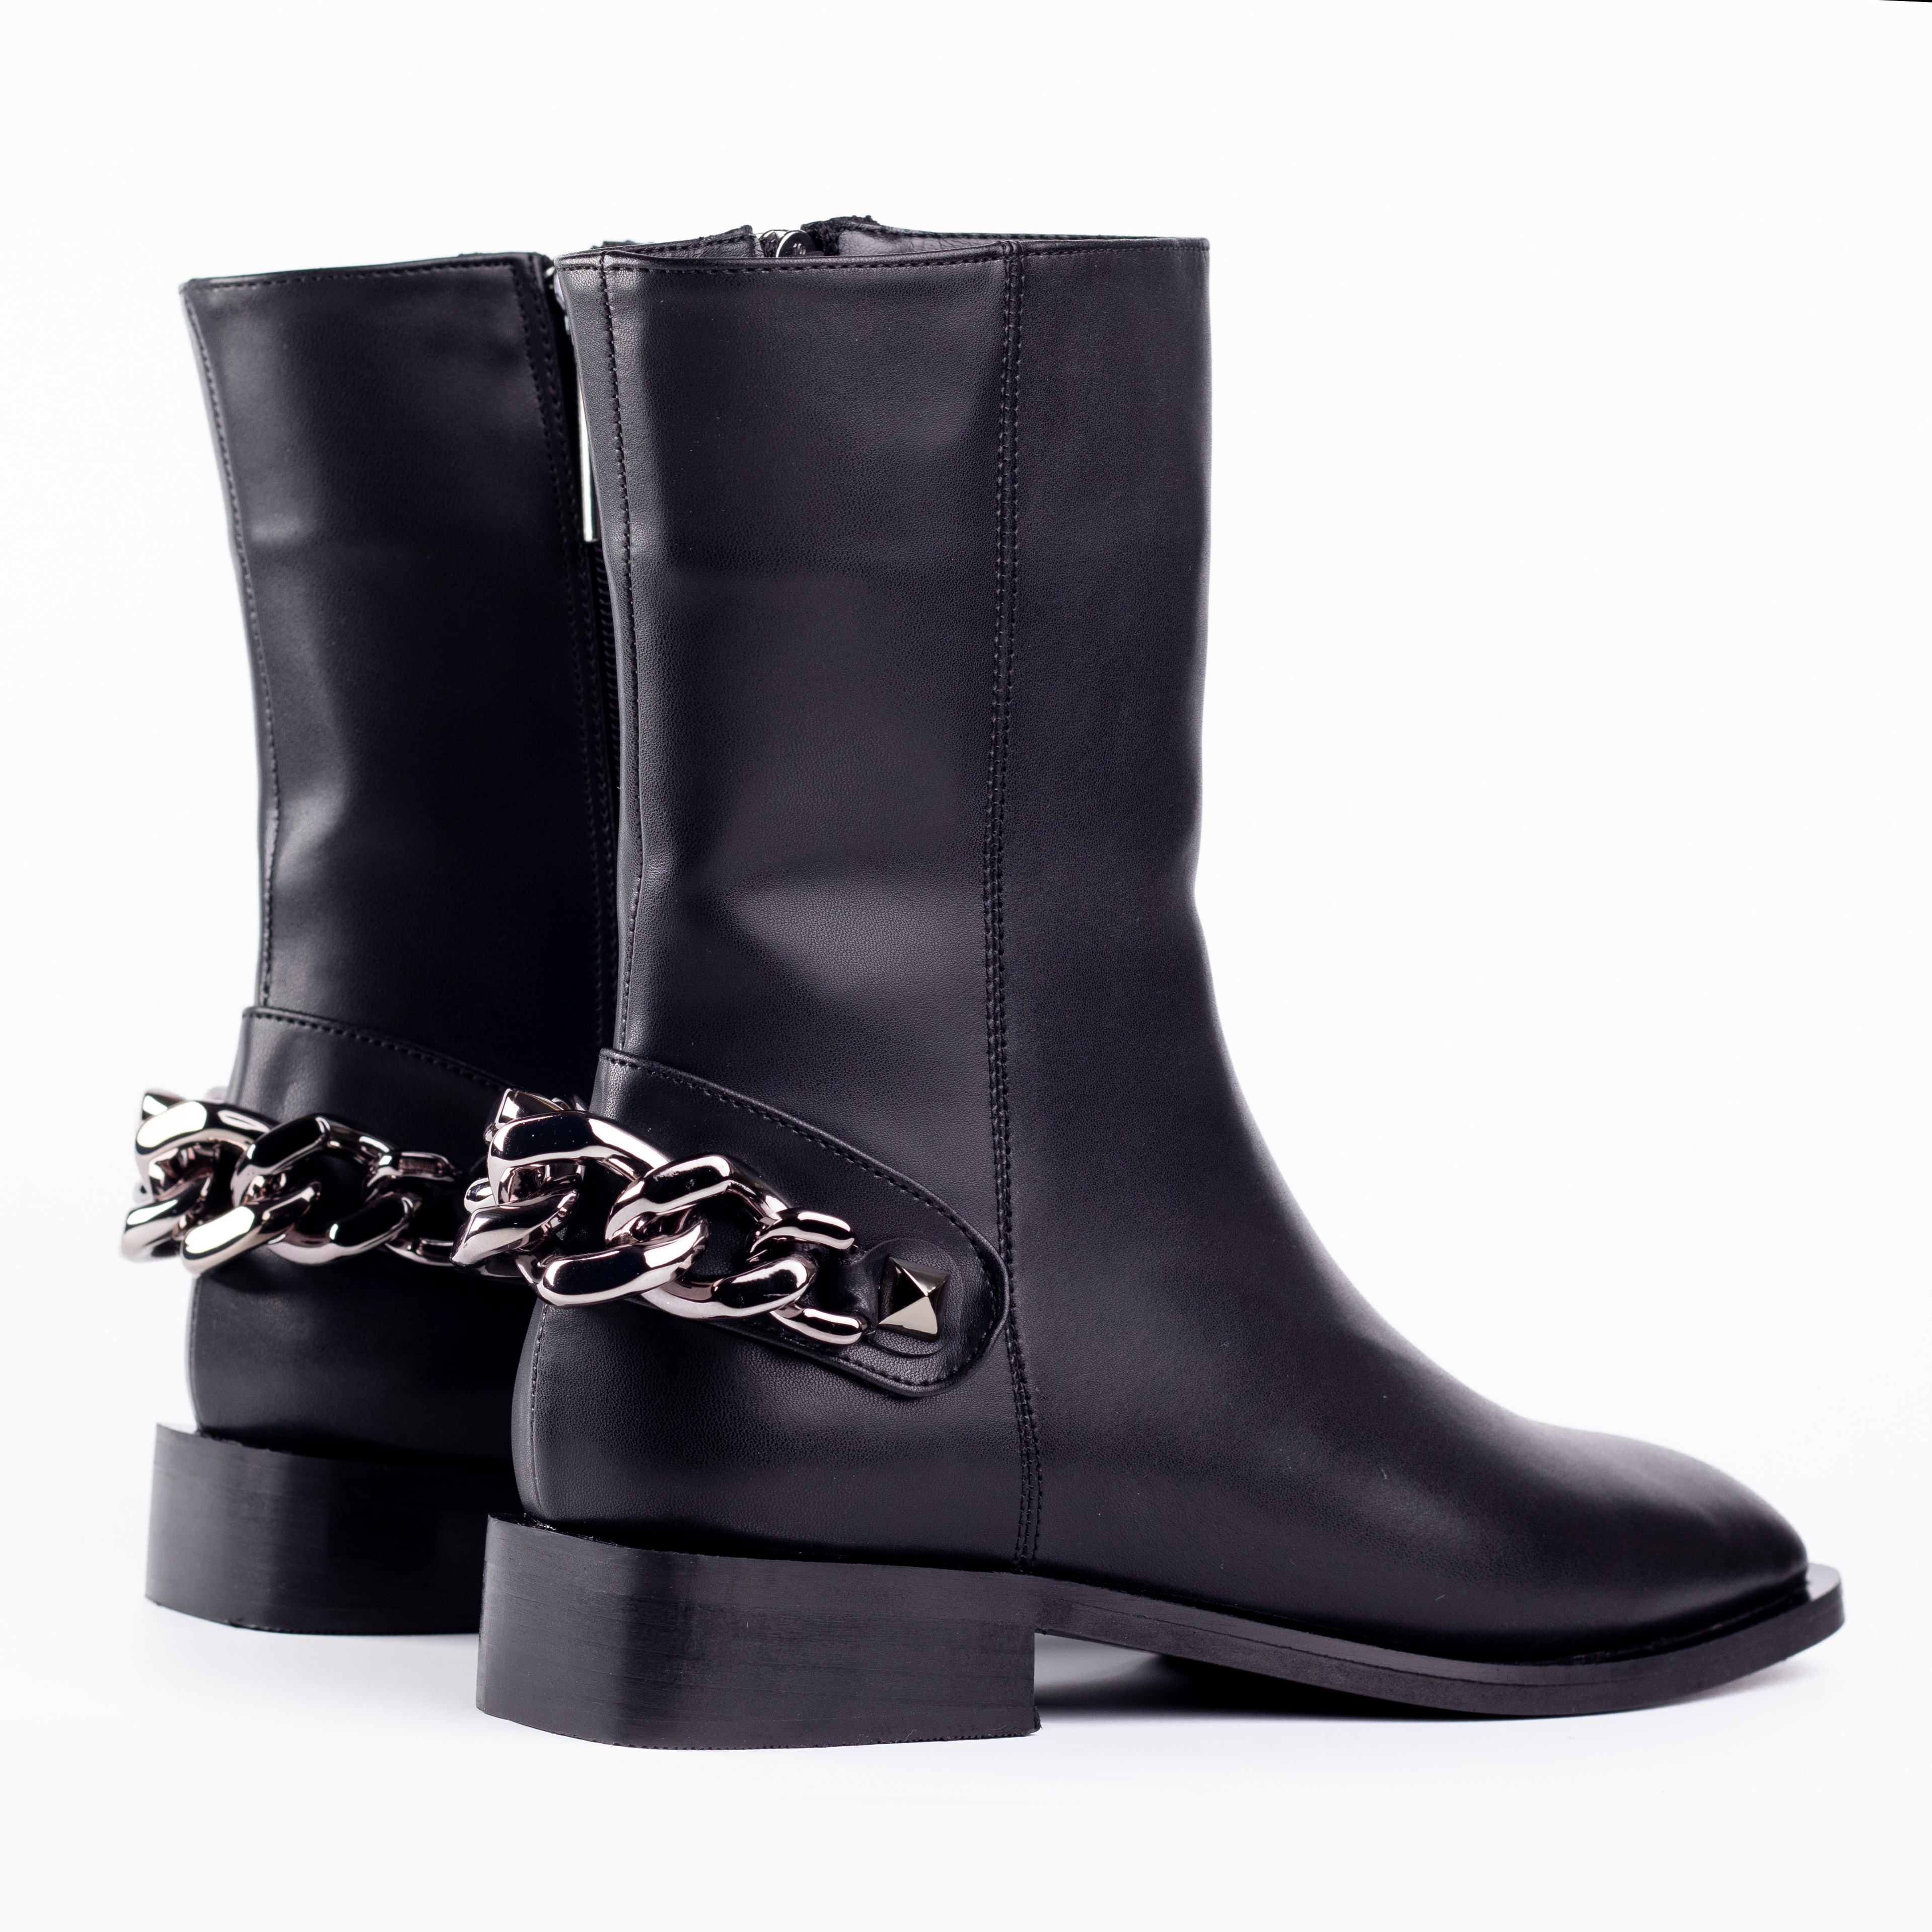 Black chain boot